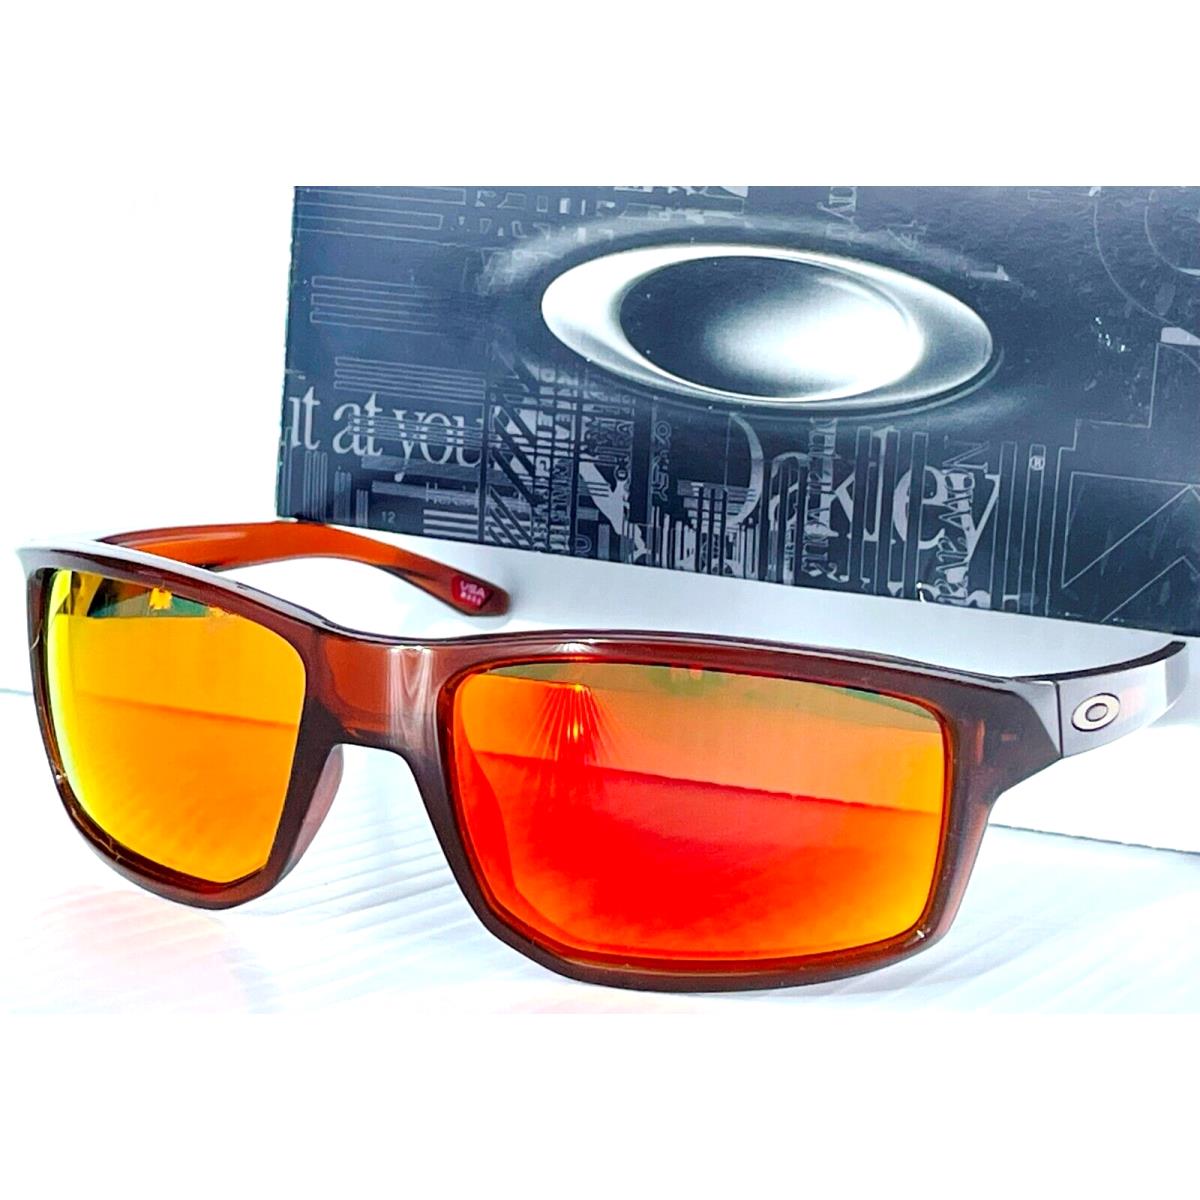 Oakley sunglasses Gibston - Brown Frame, Red Lens 8